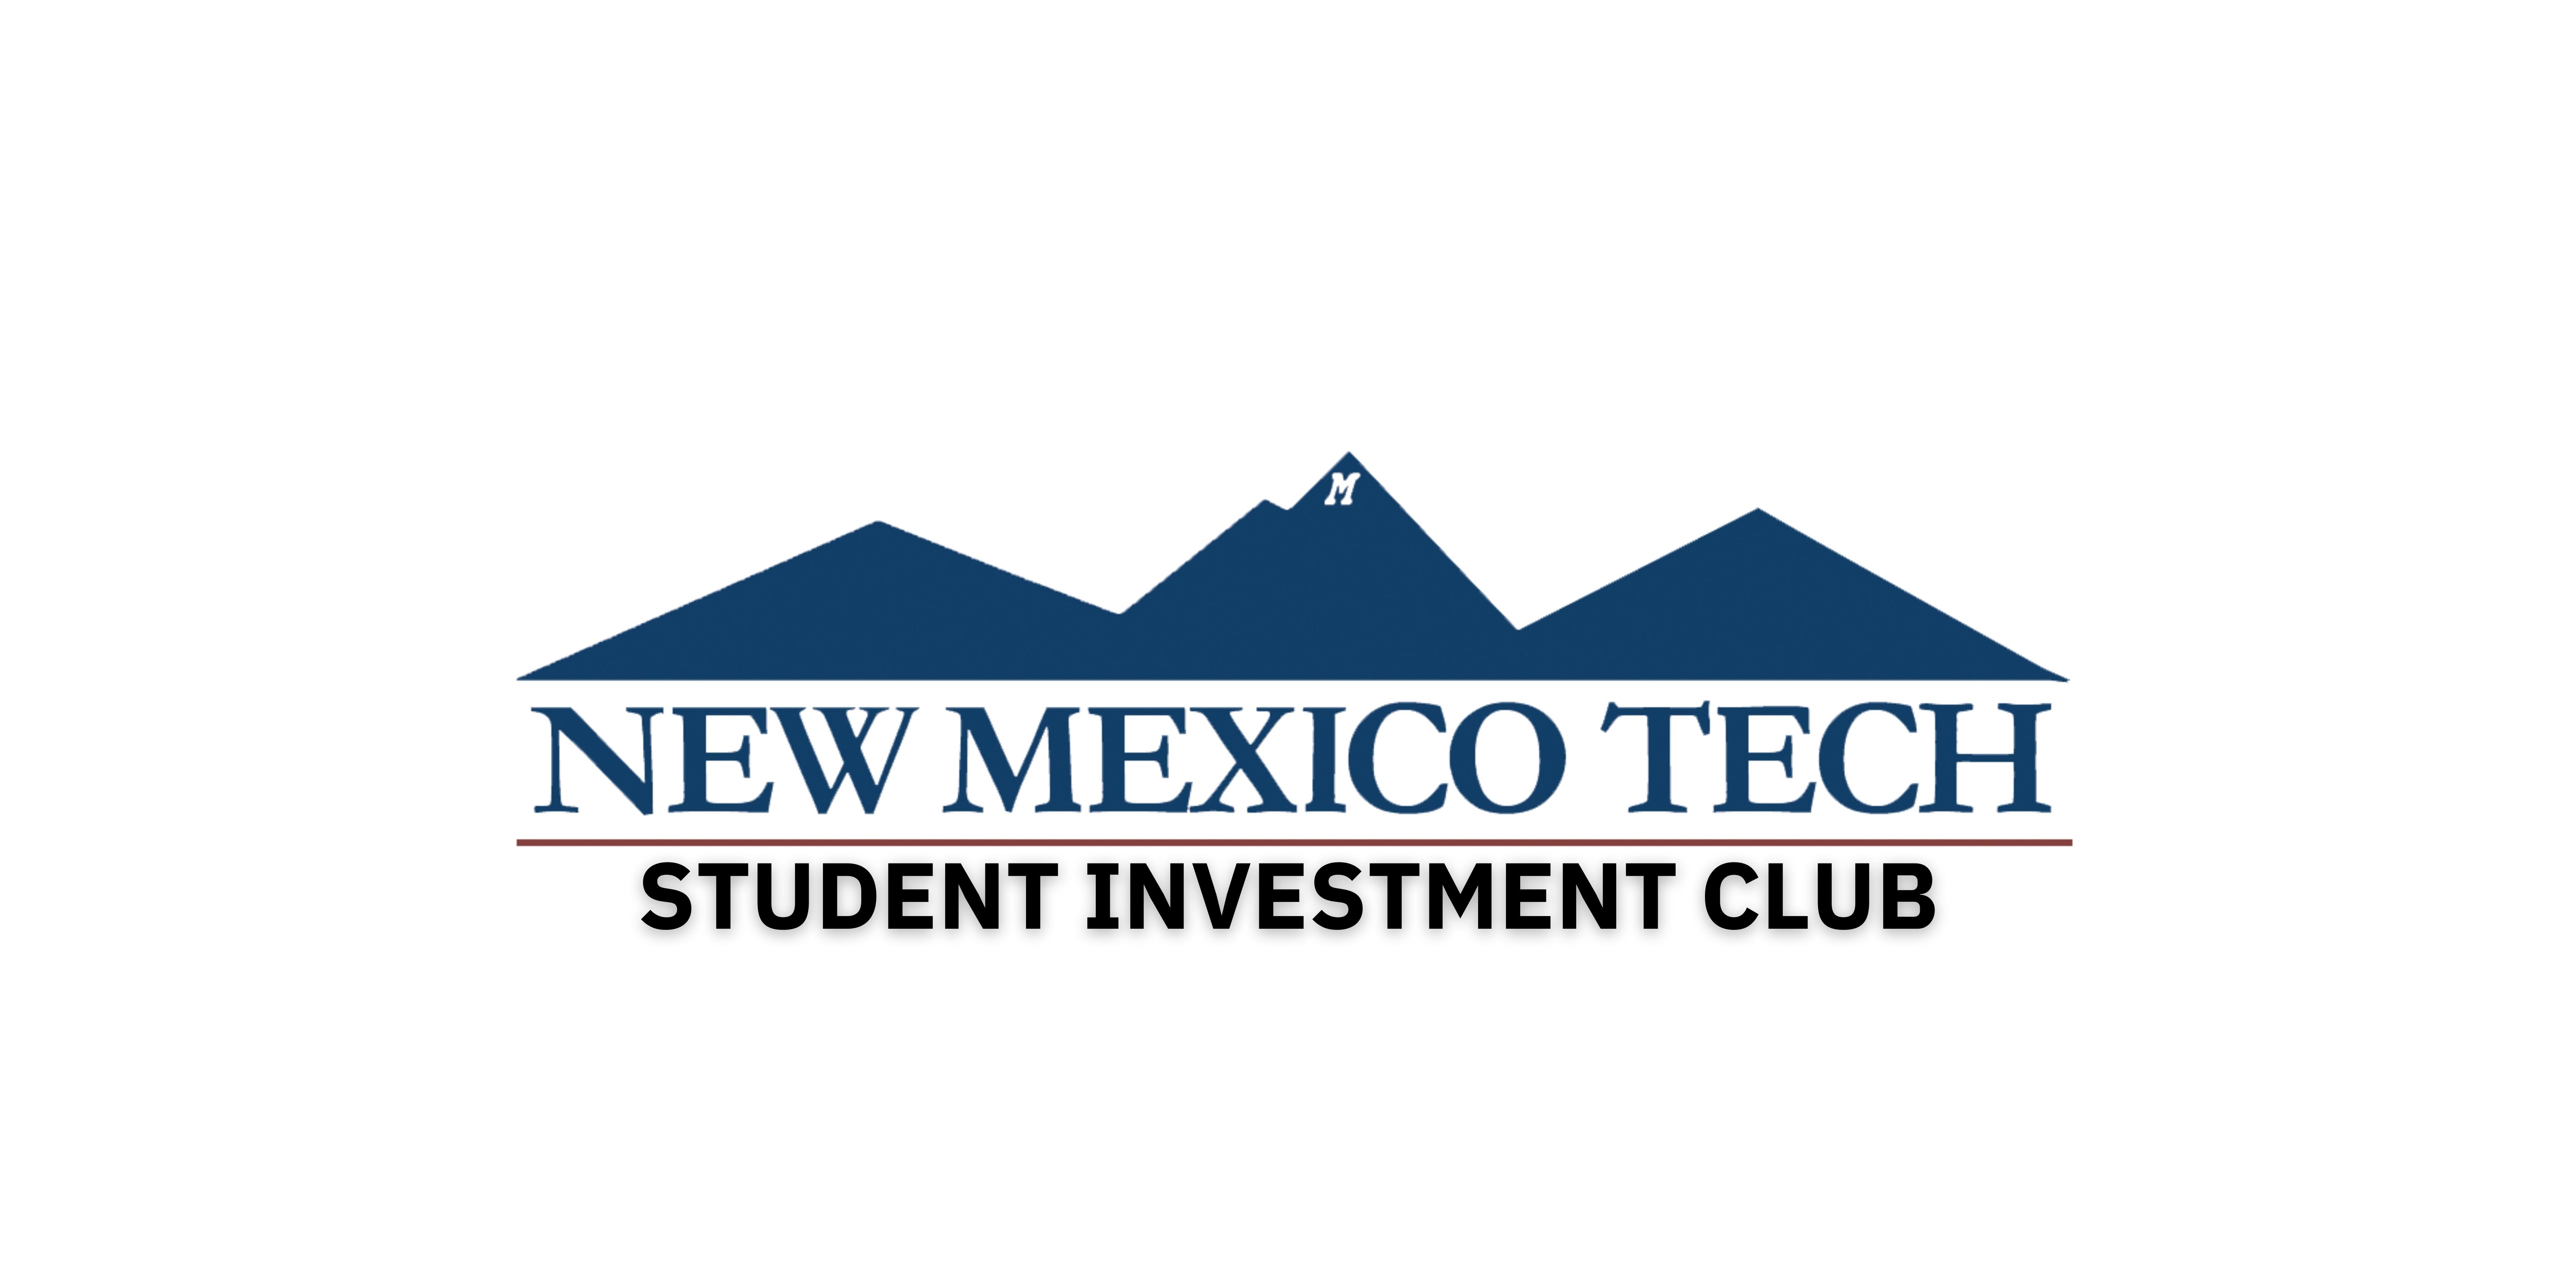 Student Investment Club logo